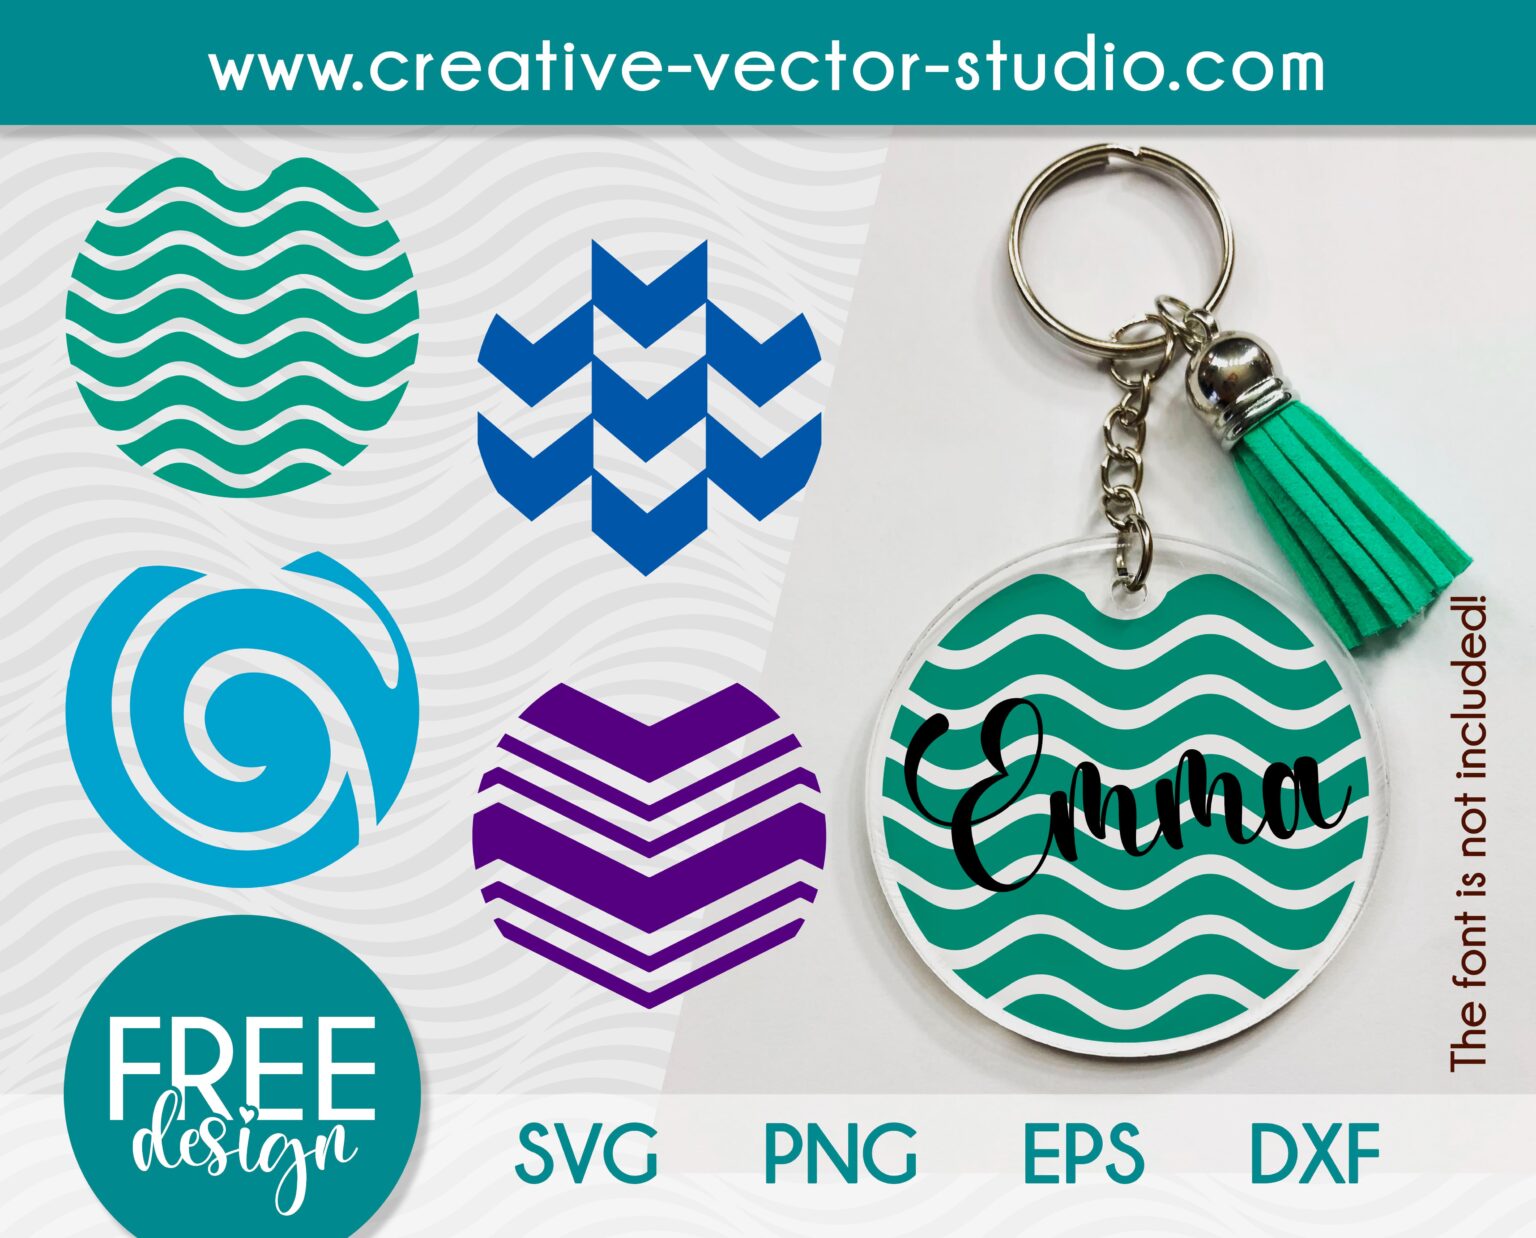 Free Circle Keychain Patterns SVG - Creative Vector Studio